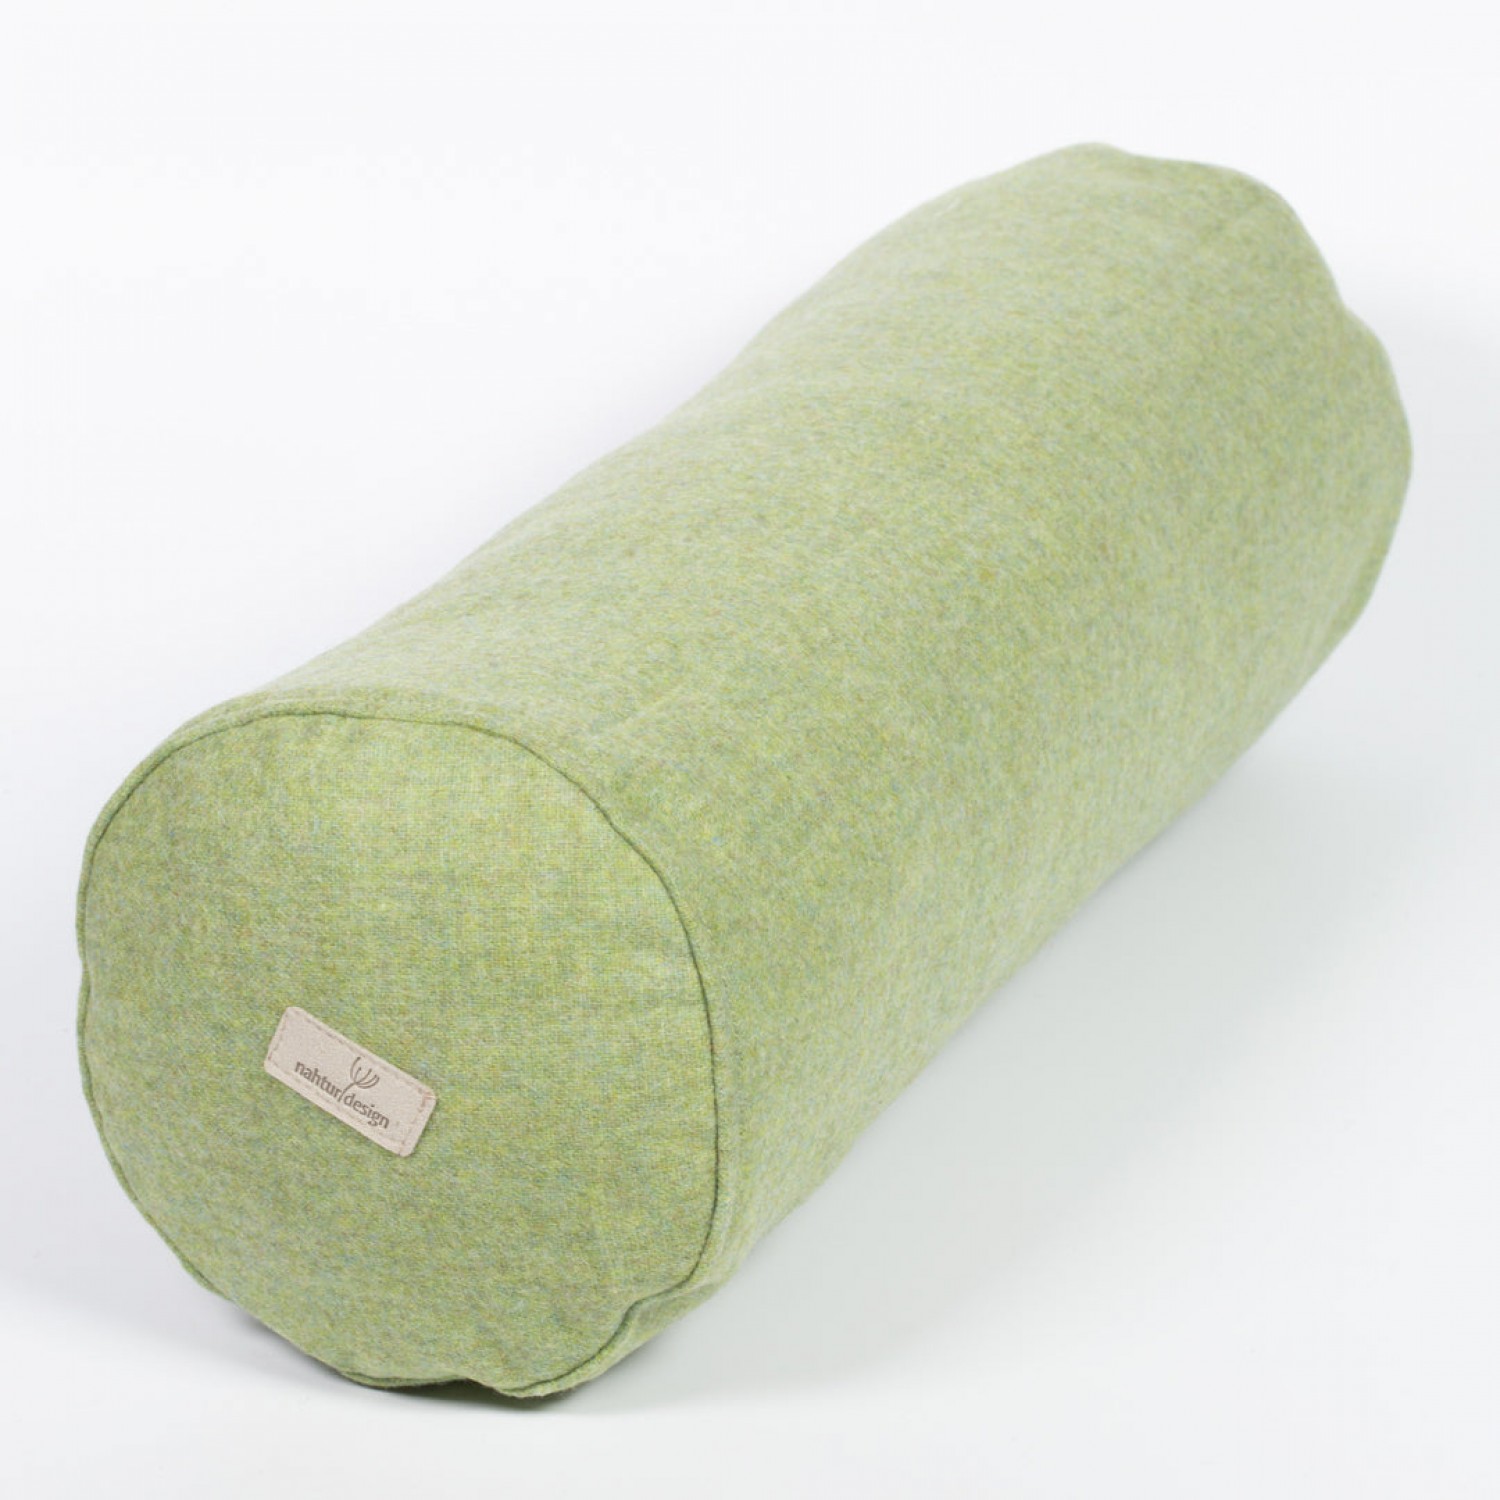 Organic Neck Roll Pillow – Fill with Woll Beads & Loden Pillowslip – Green